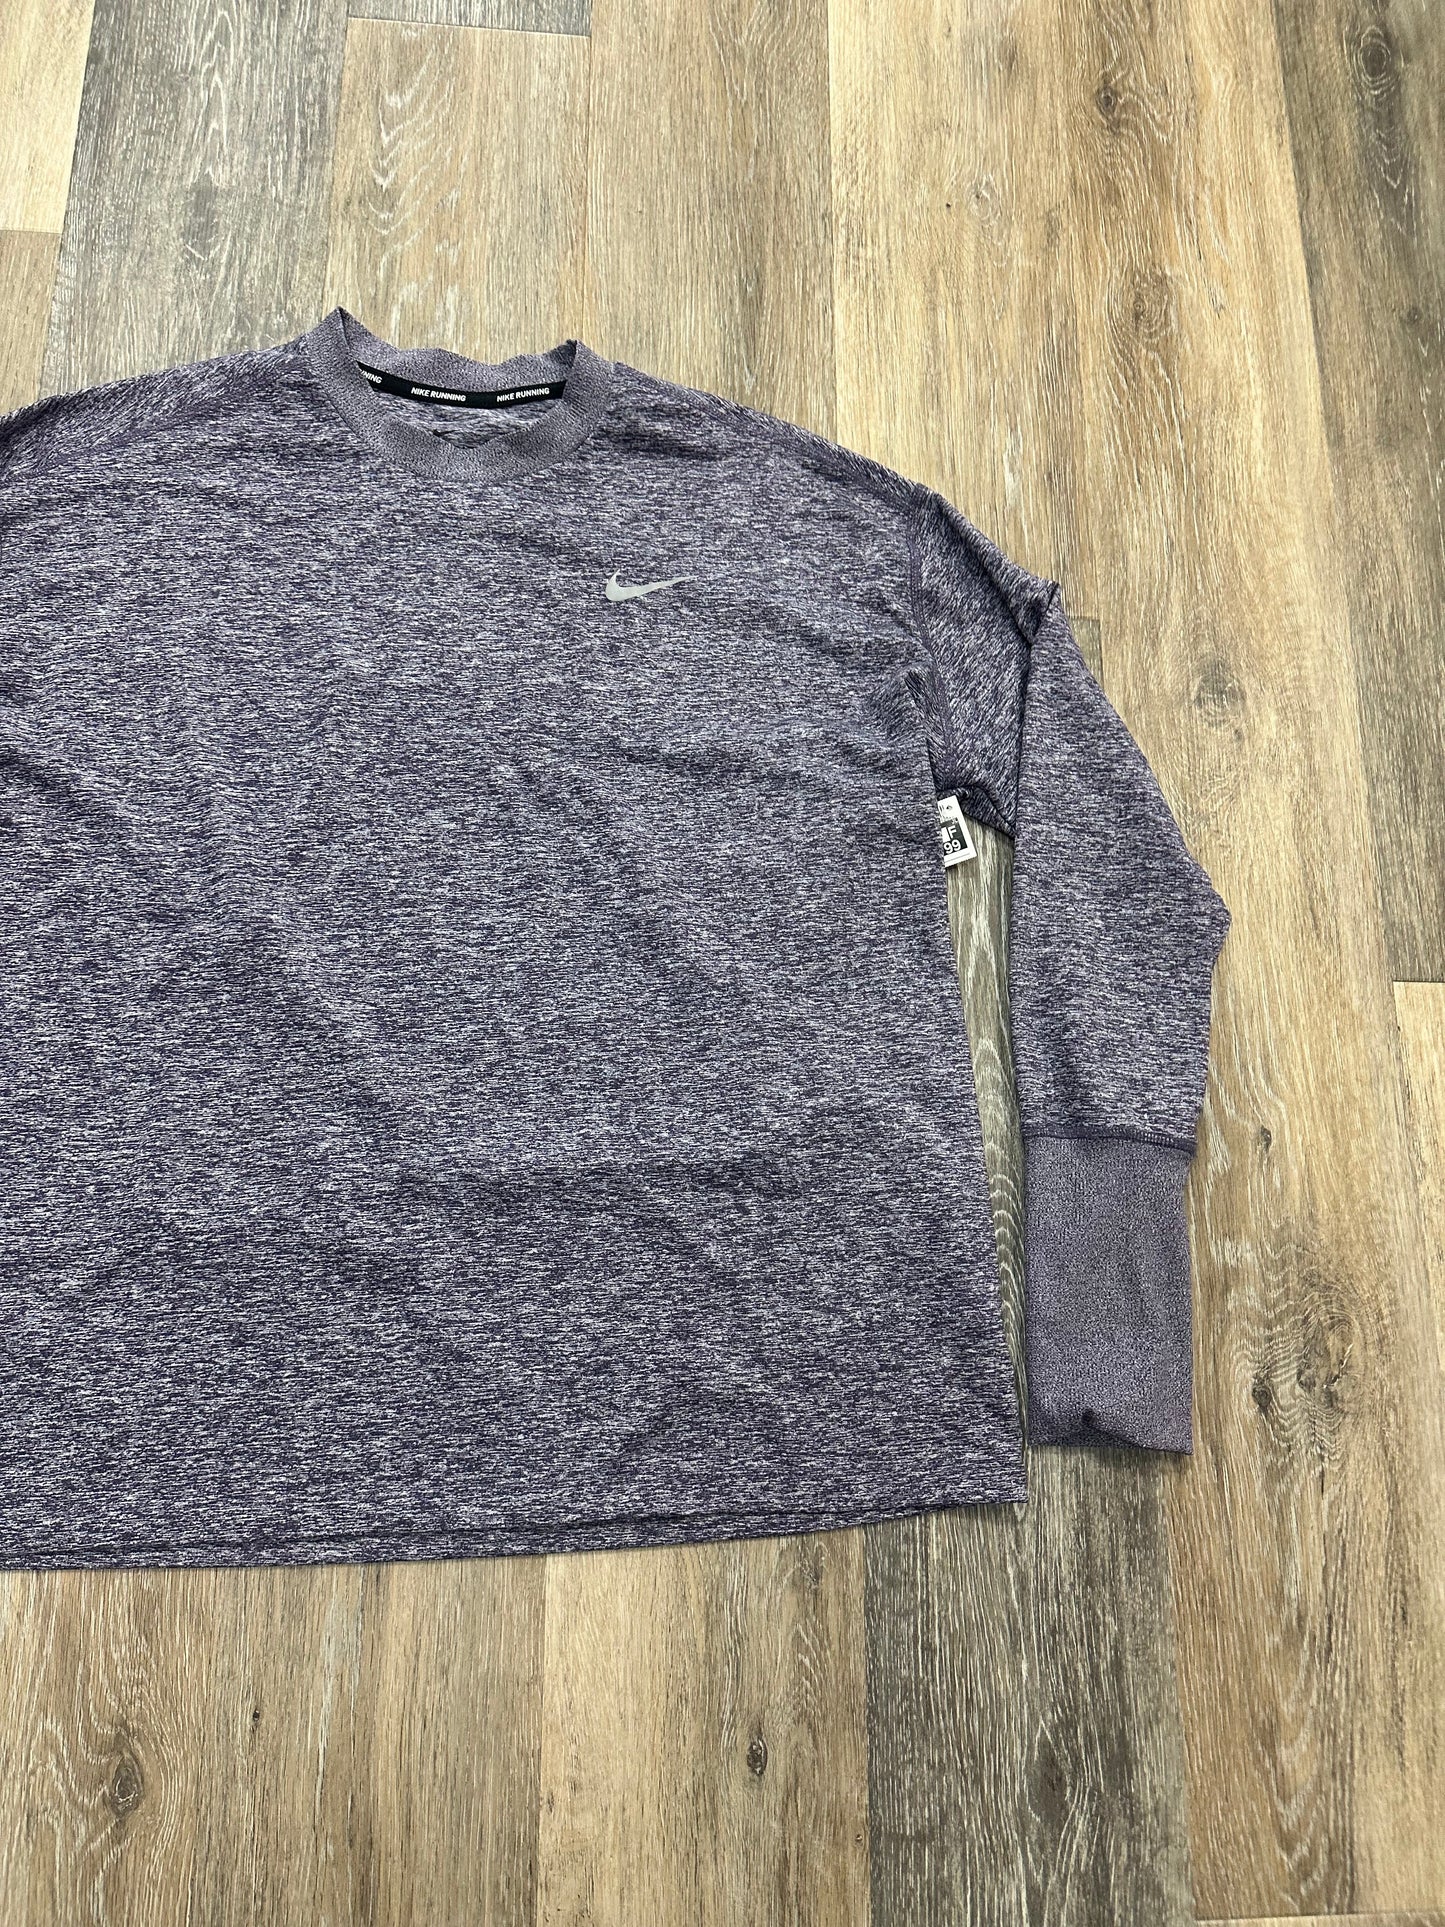 Purple Athletic Top Long Sleeve Crewneck Nike Apparel, Size Xl